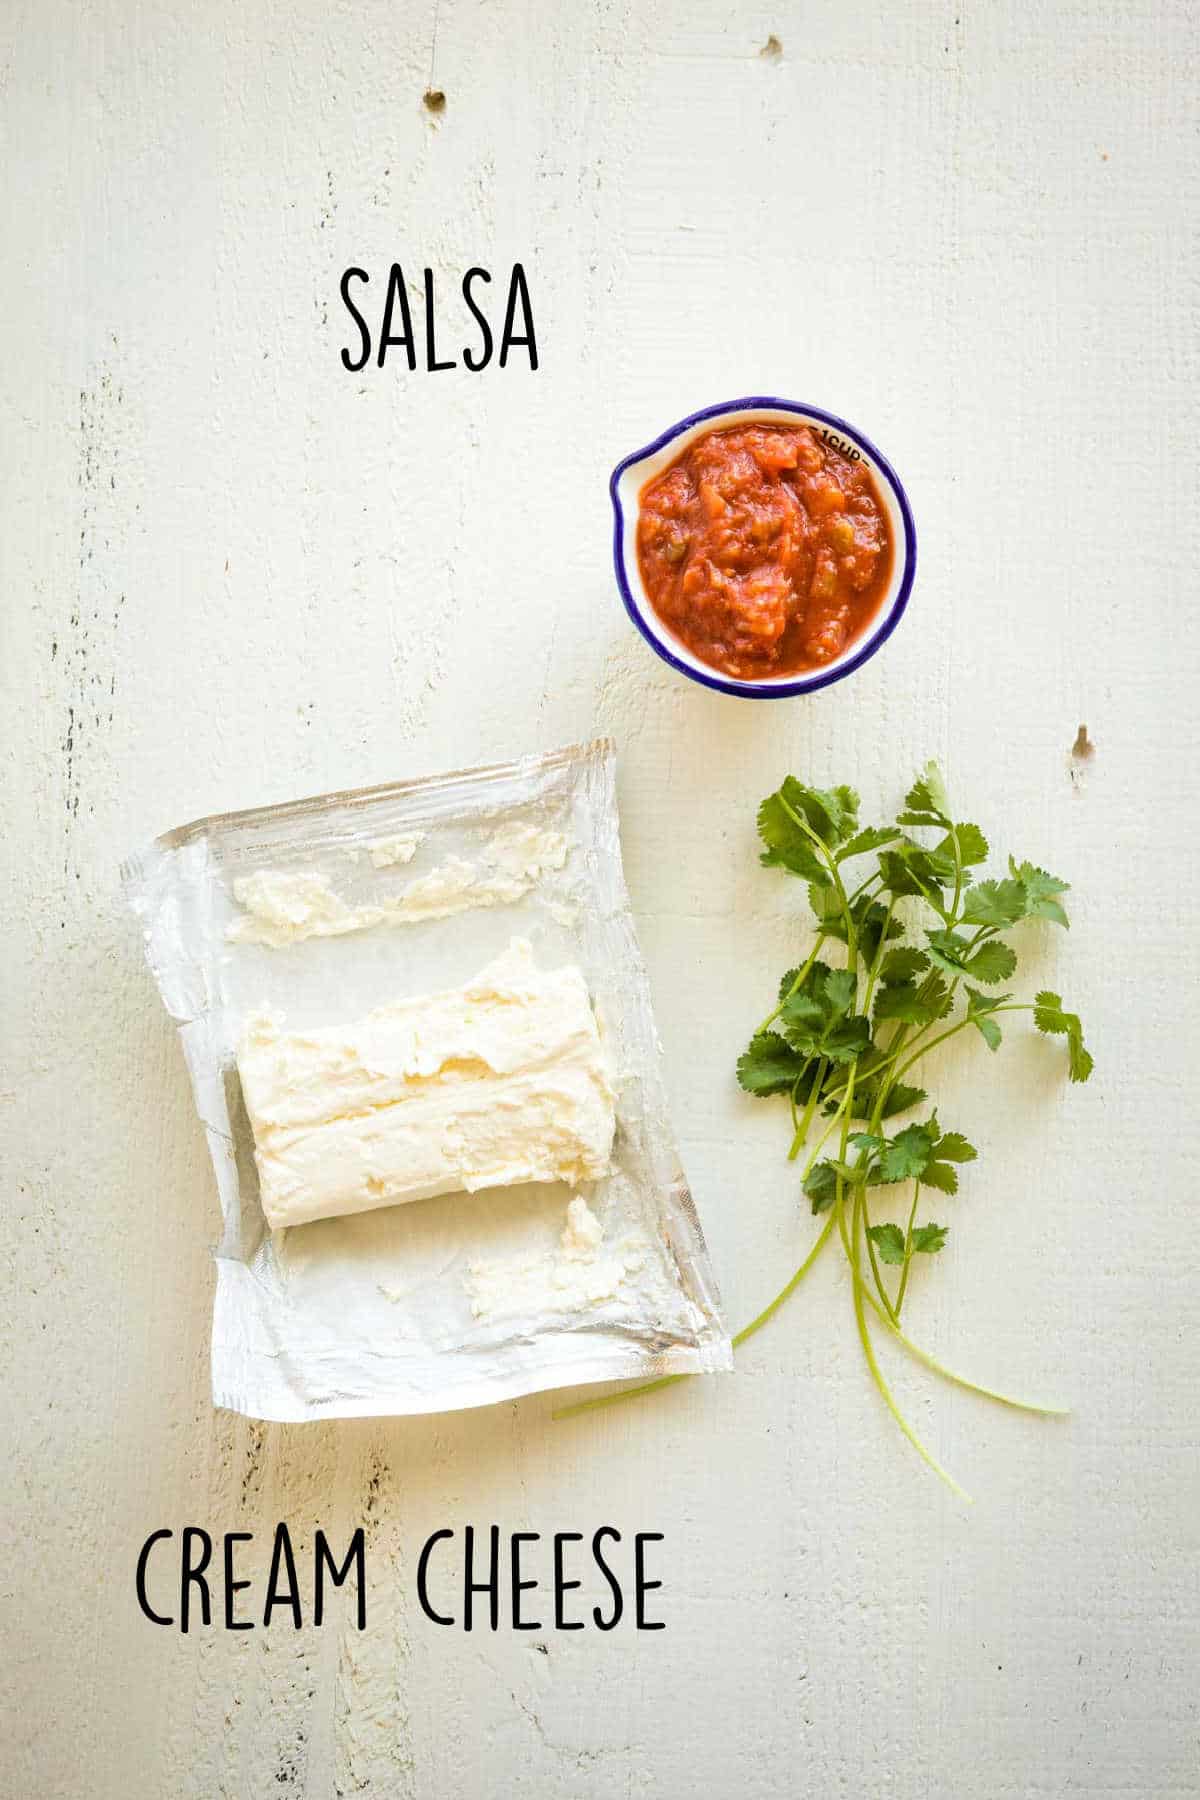 Cream cheese, salsa, and cilantro to make cream cheese salsa.